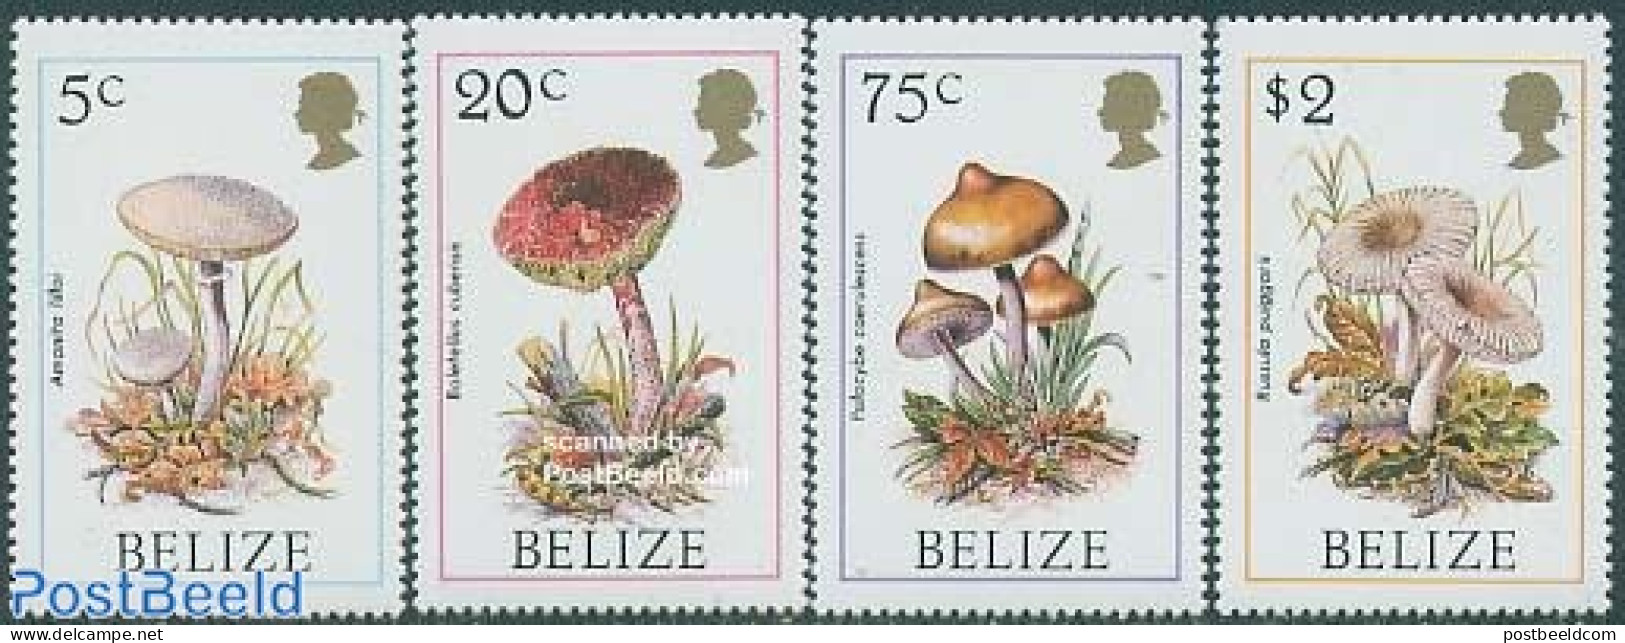 Belize/British Honduras 1986 Mushrooms 4v, Mint NH, Nature - Mushrooms - Champignons